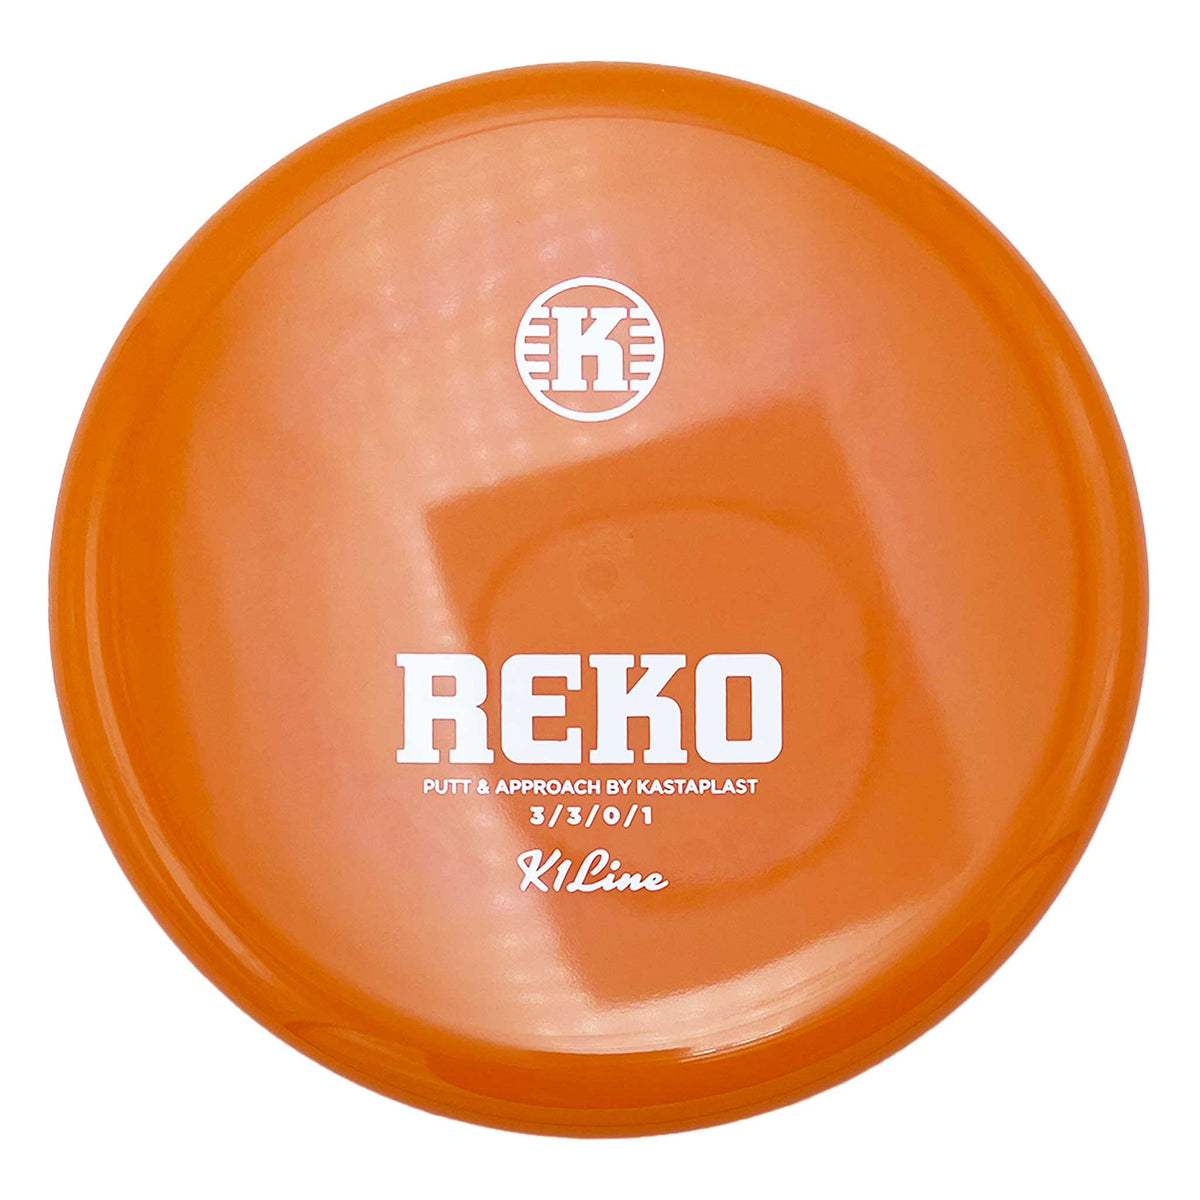 Kastaplast K1 Reko putter and approach - Orange